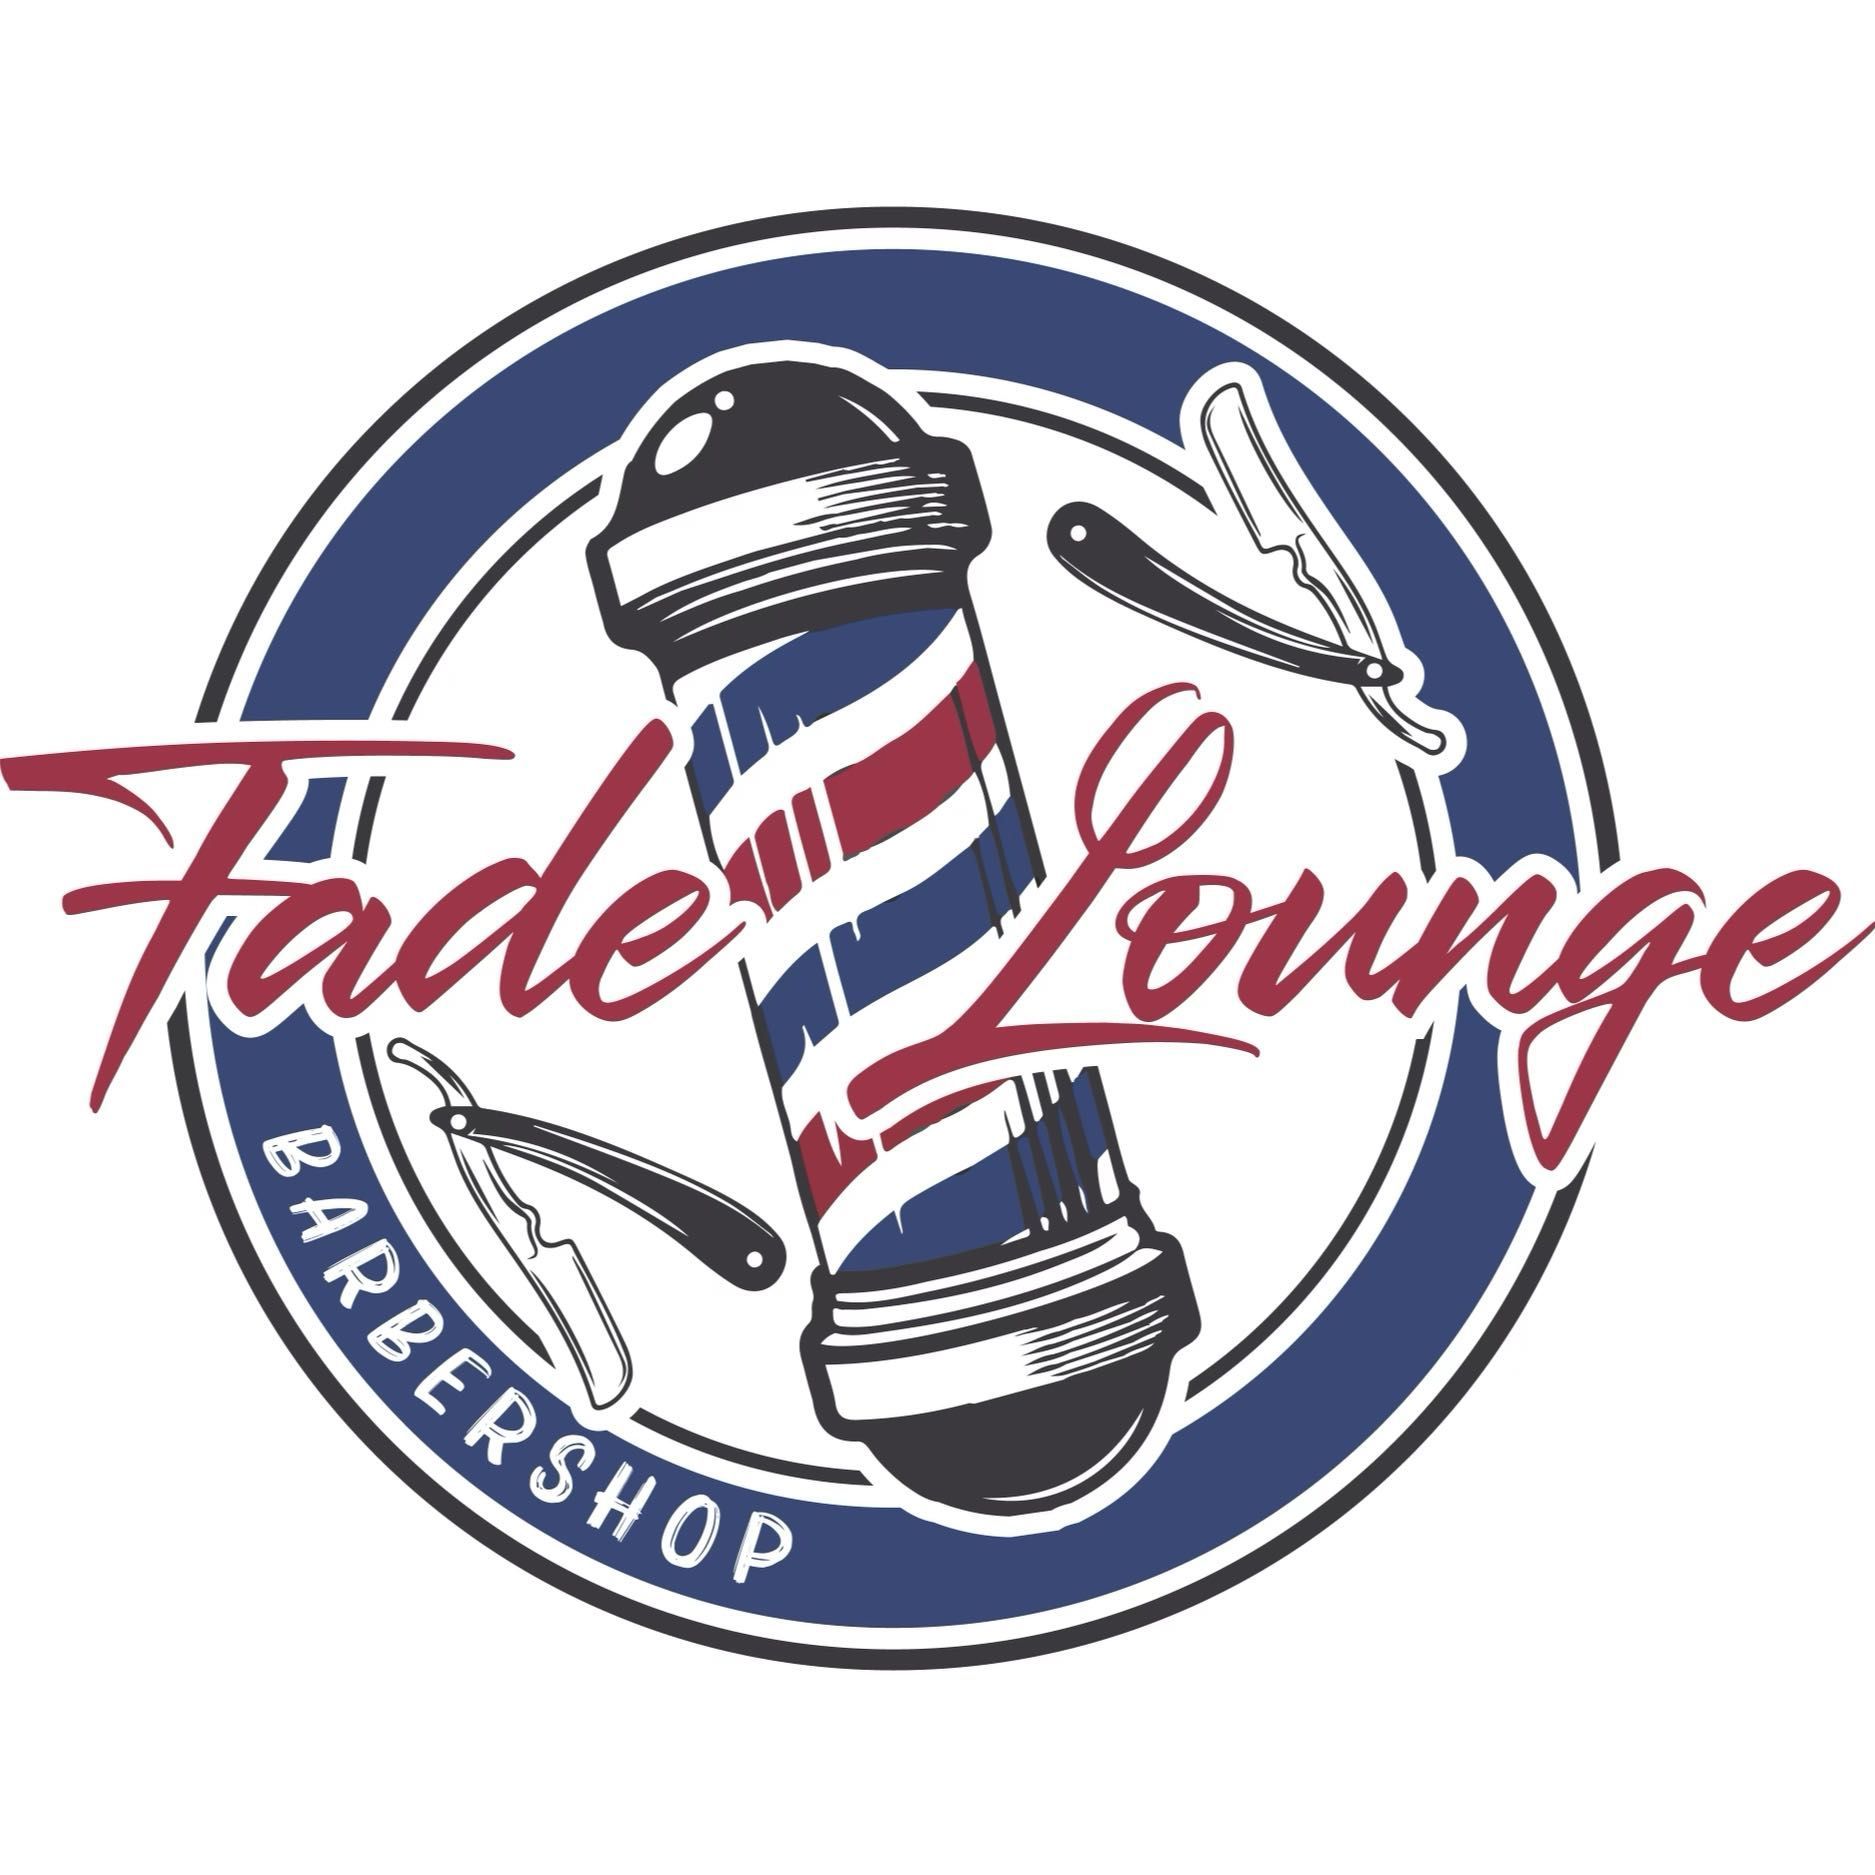 Fade Lounge, 602 2nd street, STE B, Snohomish, 98290